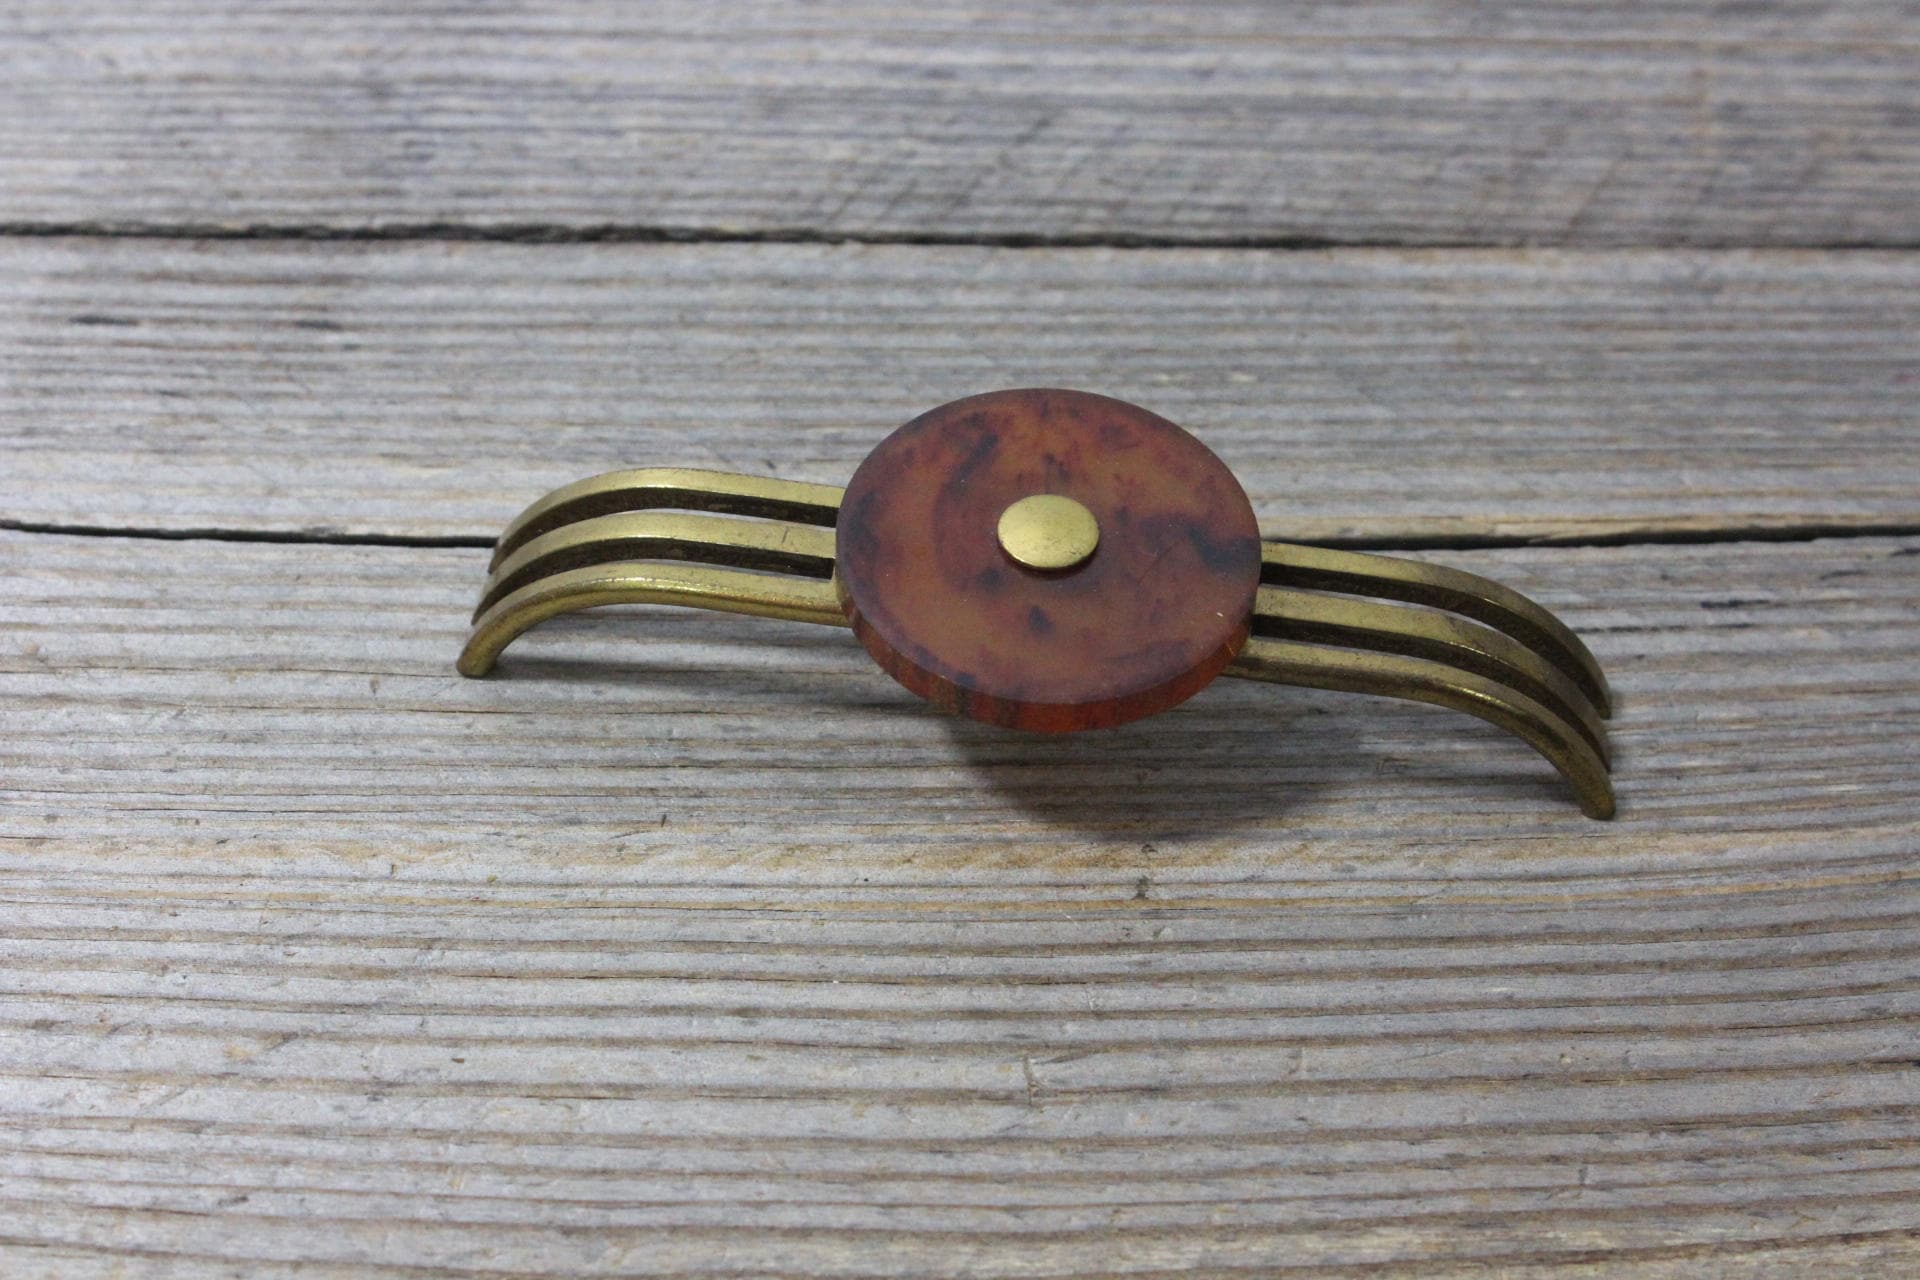 Art Deco bakelite or resin drawer pulls, vintage brasstone pulls